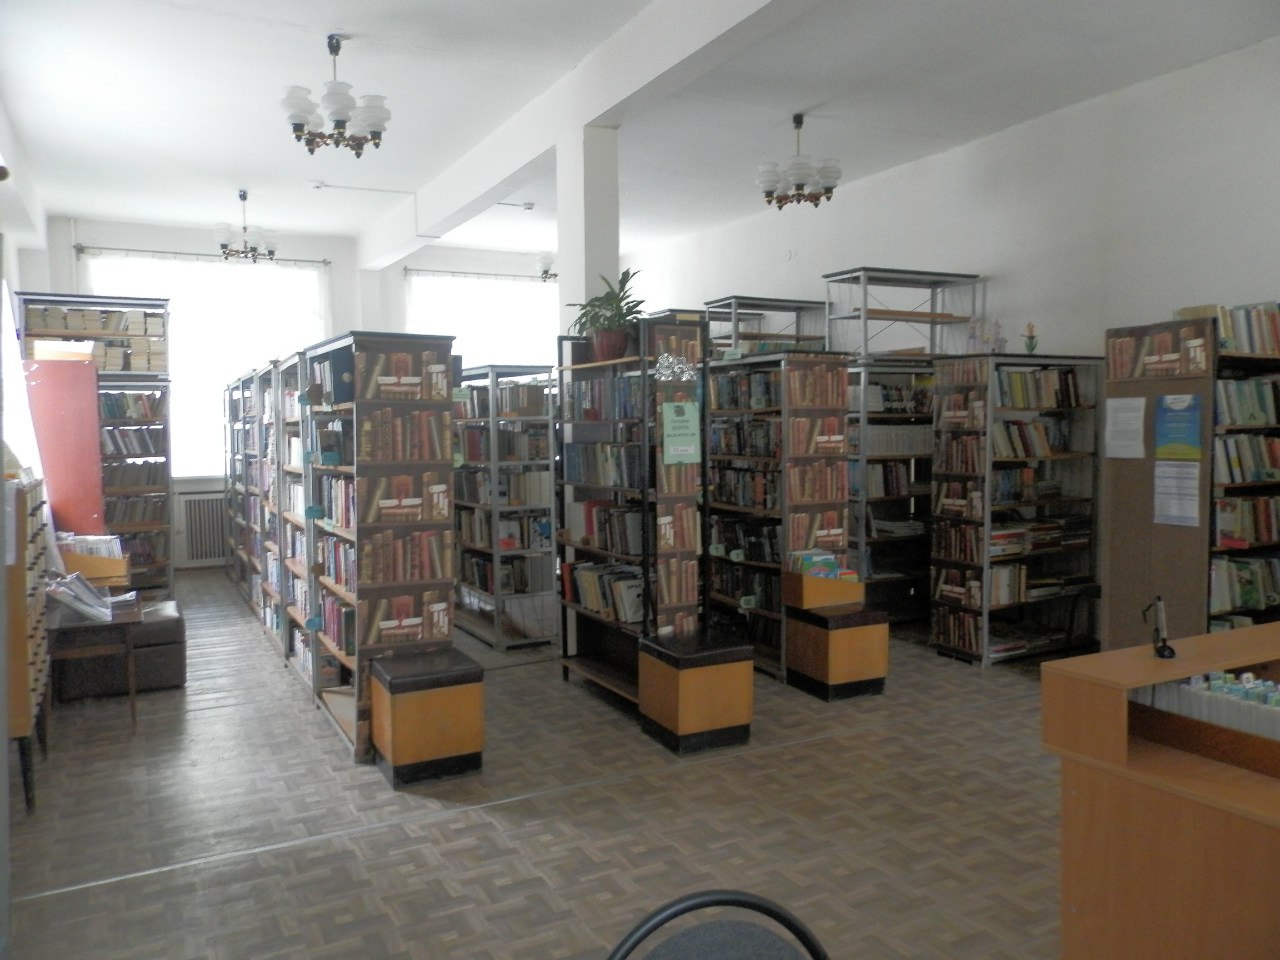 Ижевск библиотека сайт